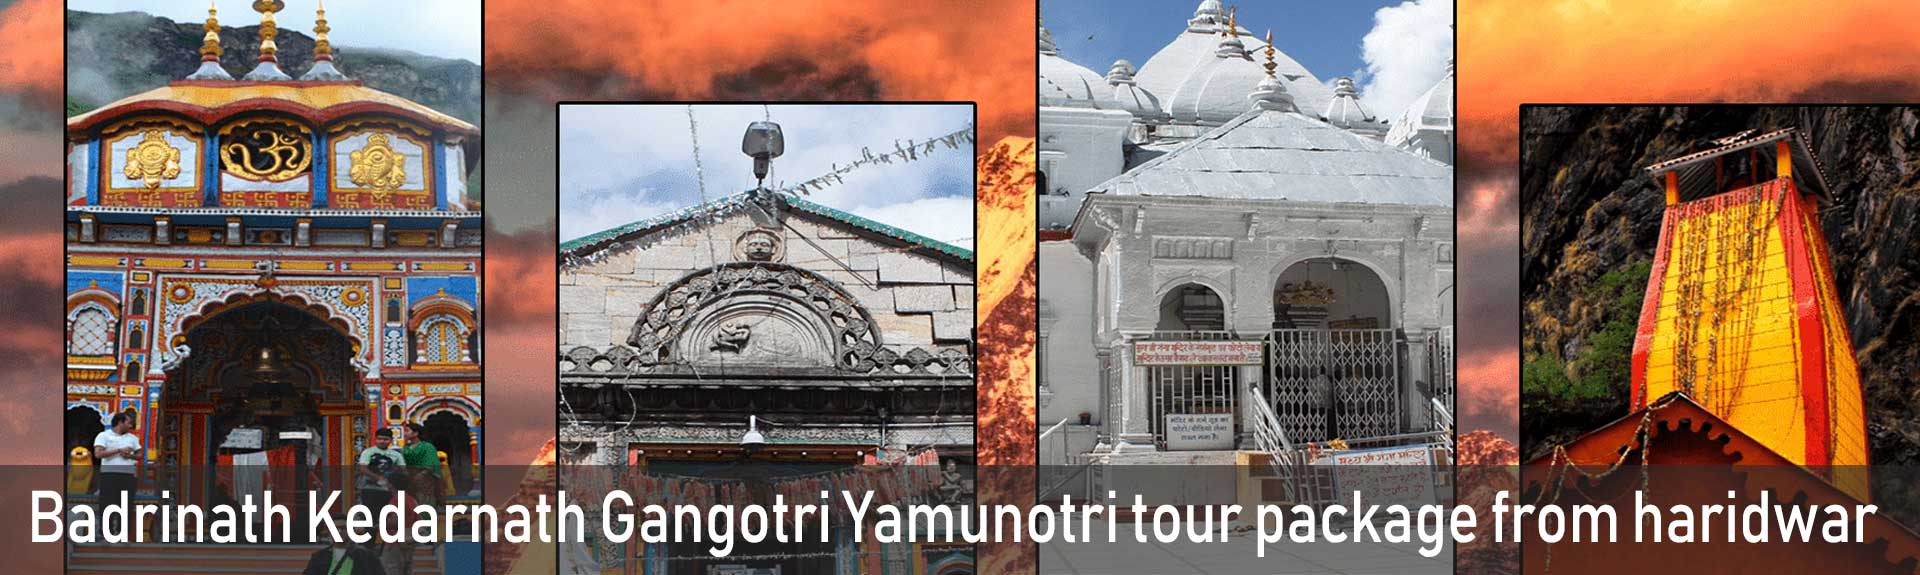 Badrinath Kedarnath Gangotri Yamunotri tour package from haridwar